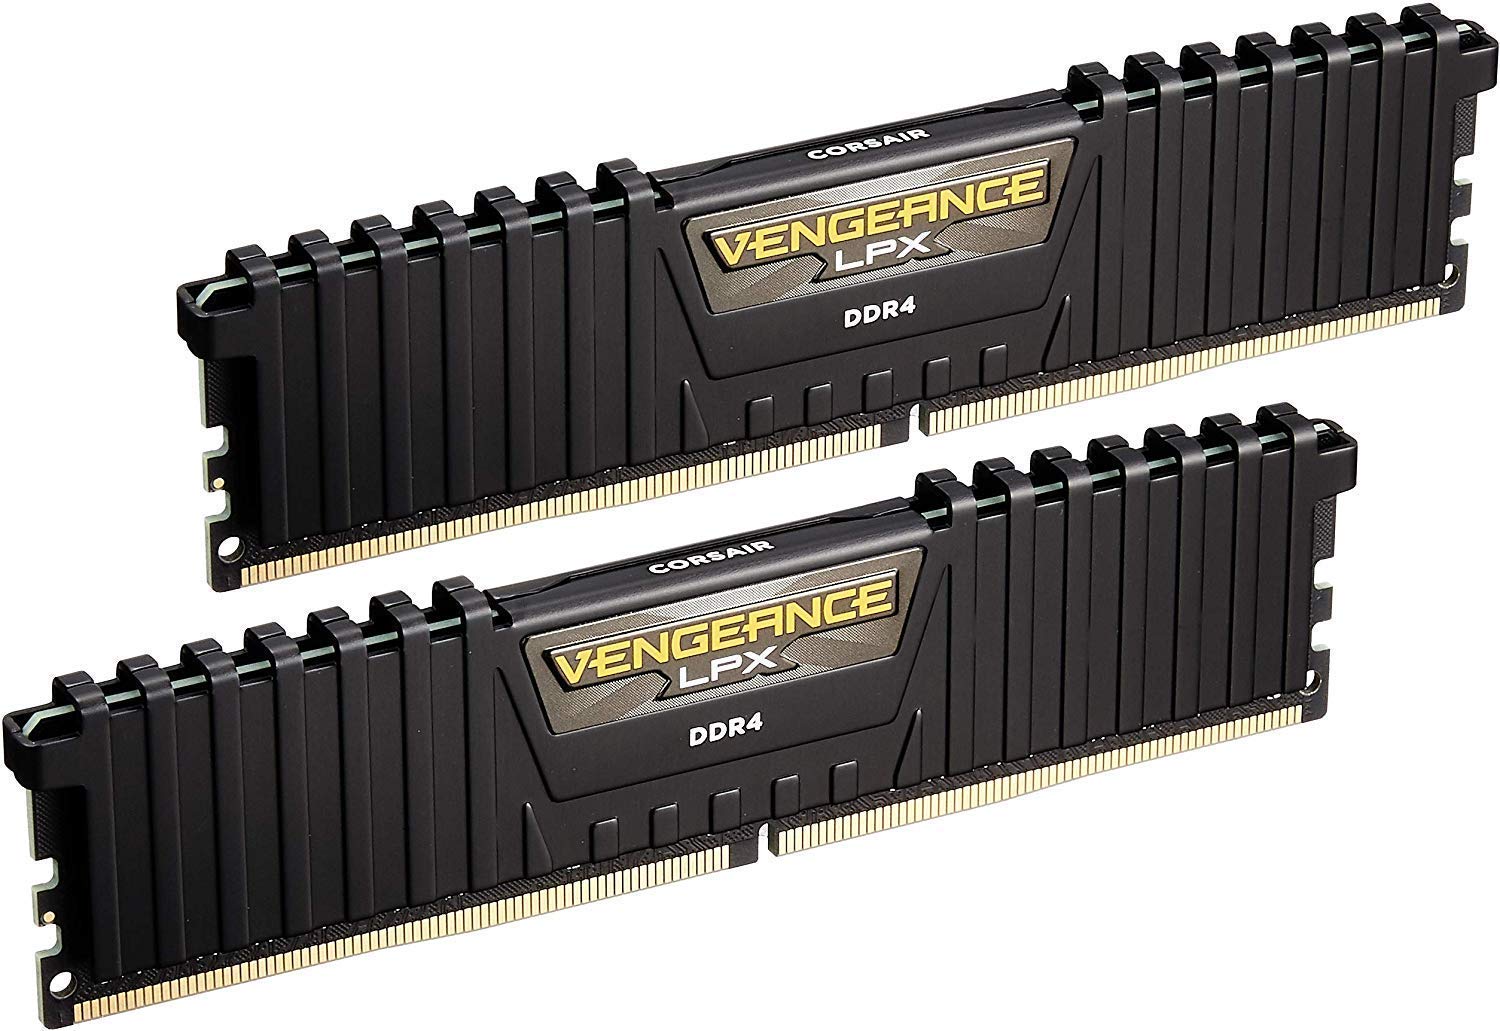 Corsair Vengeance LPX 16GB (2x8GB) DDR4 DRAM 3000MHz C15 Desktop Memory Kit - Black (CMK16GX4M2B3000C15)